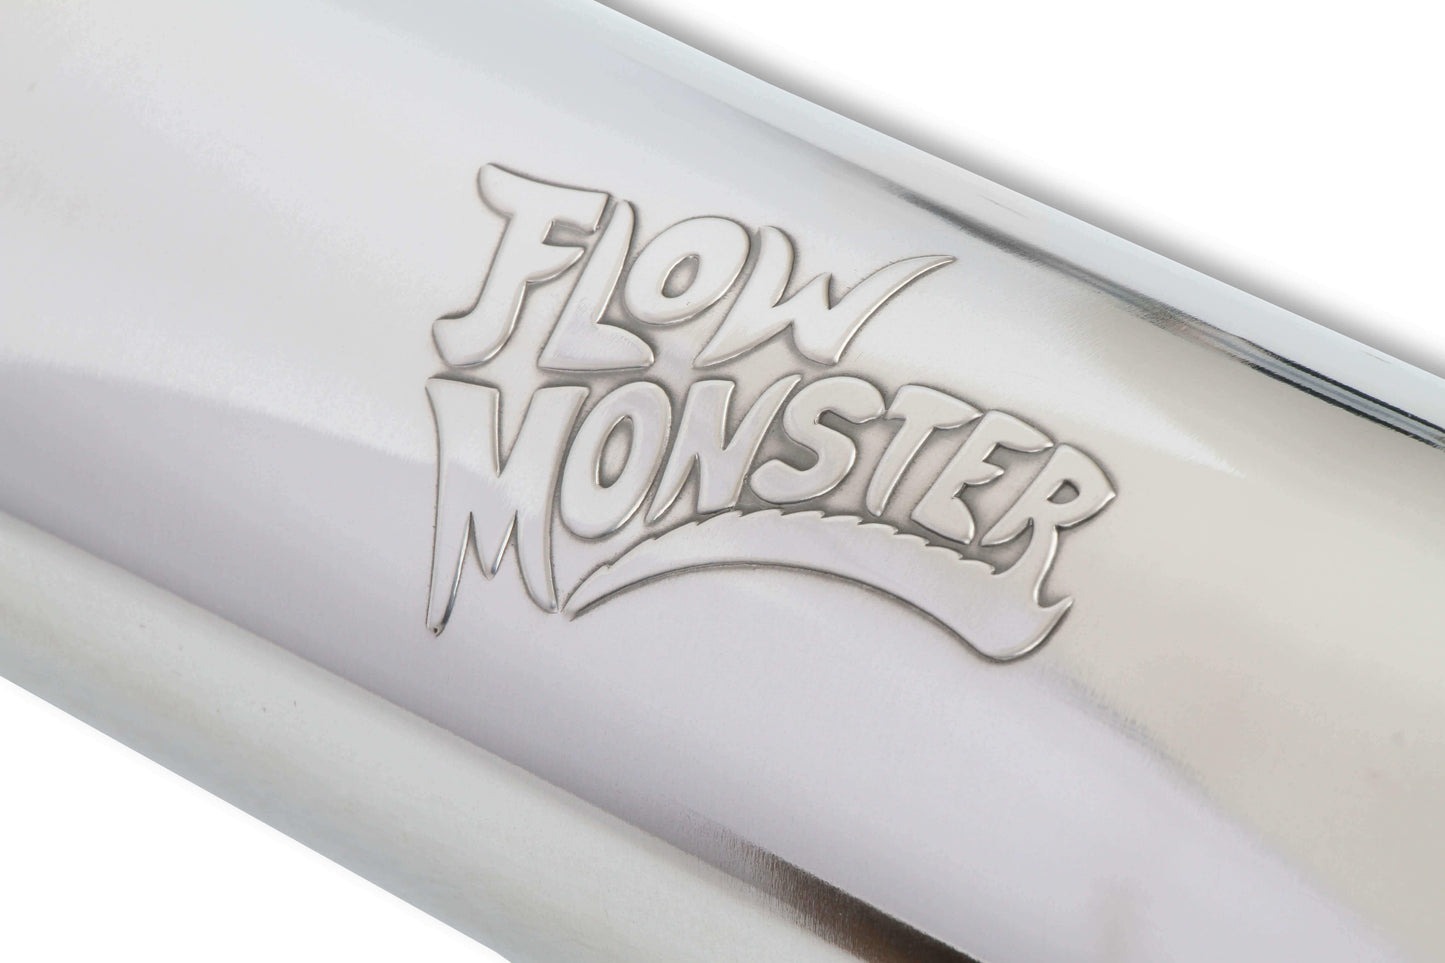 Flowmonster Round Performance Muffler 3.00 Inlet/ 3.00 Outlet 14419-FM Polished